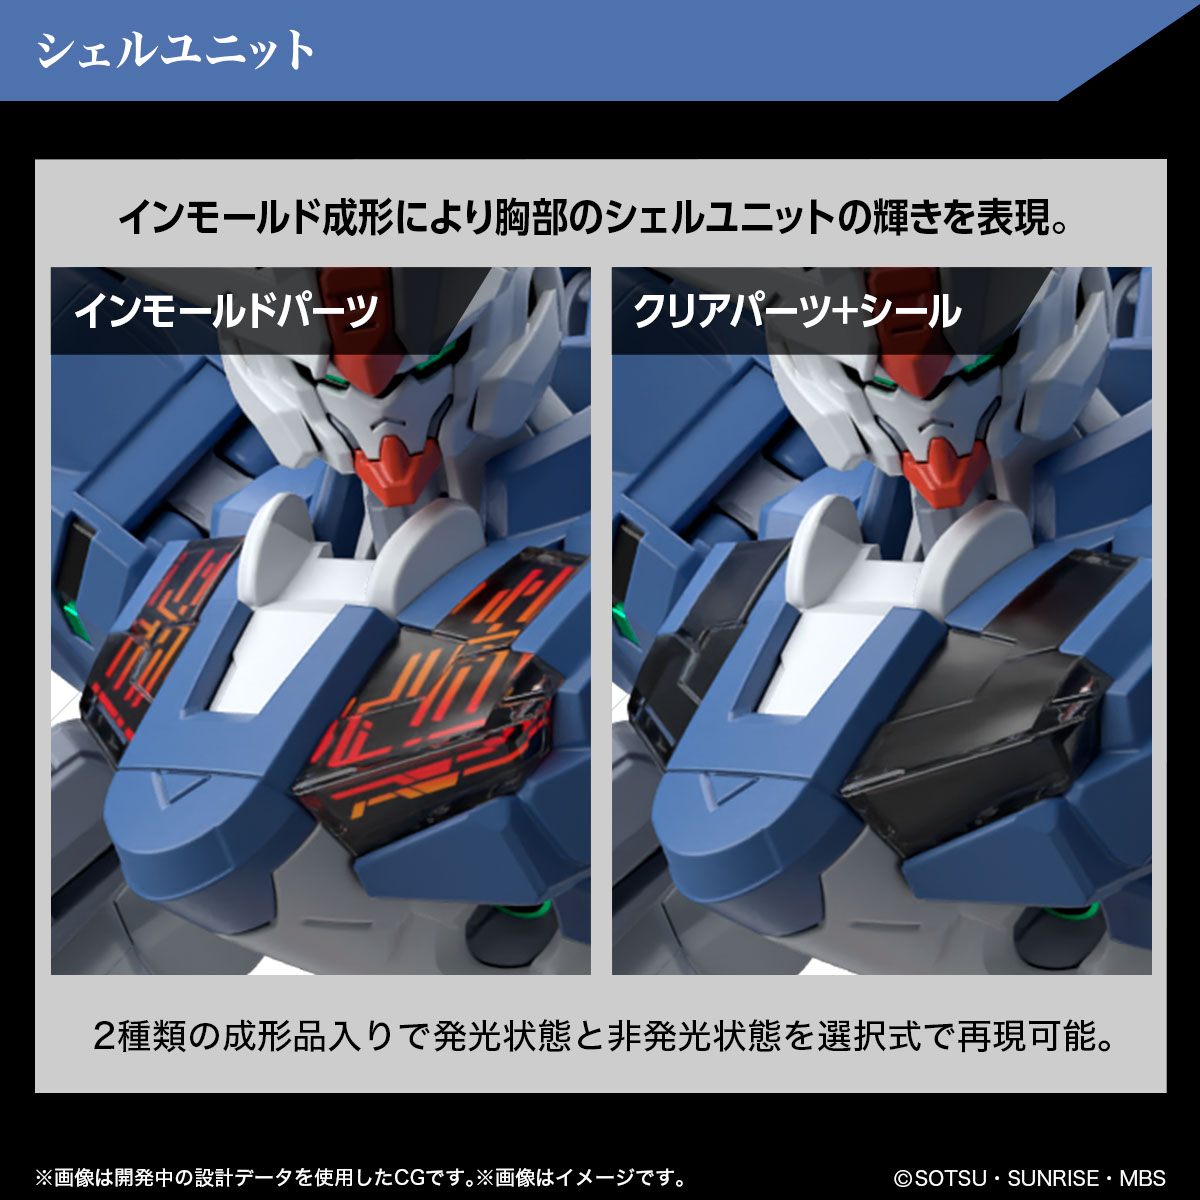 XVX-016RN Gundam Aerial Rebuild GUNDAM THE WITCH FROM MERCURY HG 1/144 Scale Model Kit Figure GUNPLA BANDAI